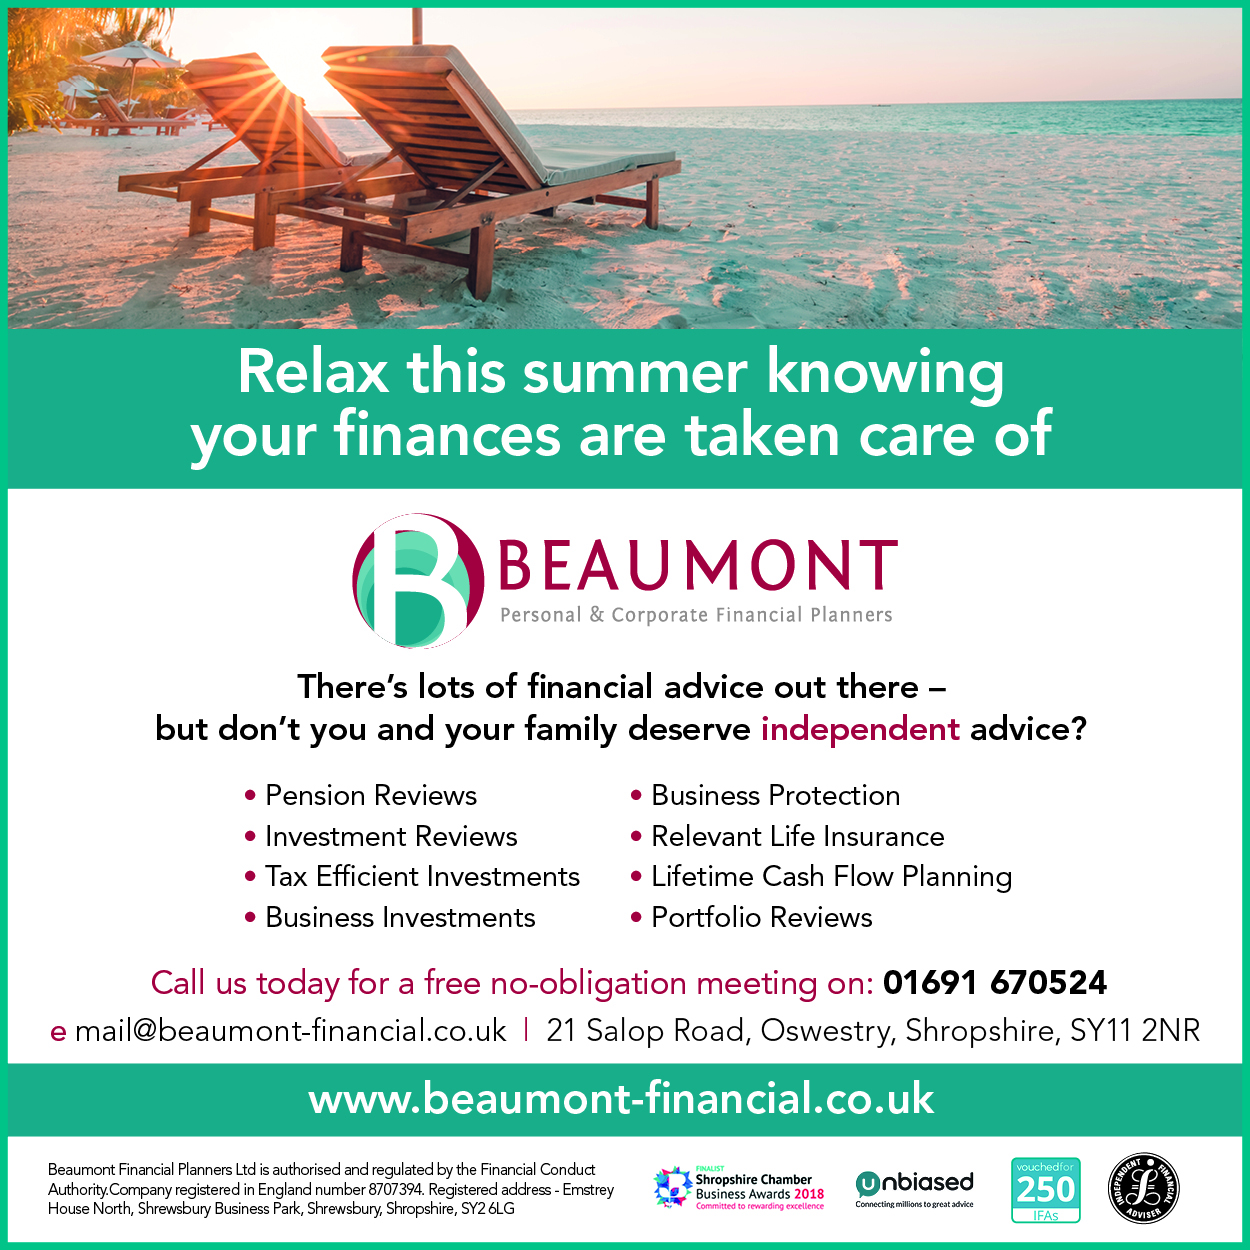 http://www.beaumont-financial.co.uk